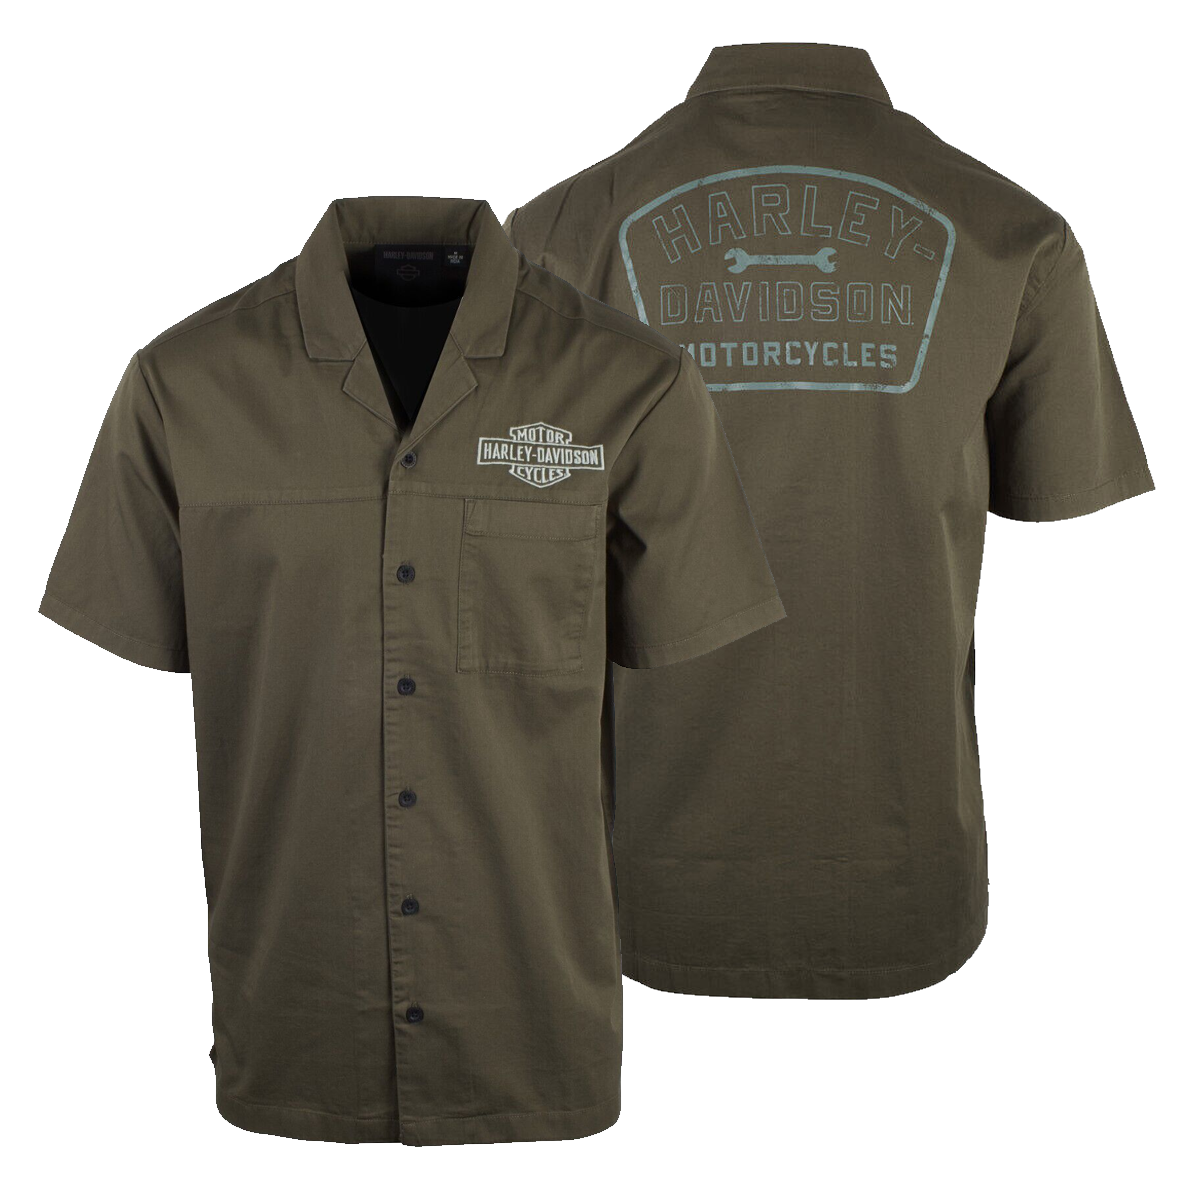 Harley-Davidson Men's Grape Leaf Wrench Crew S/S Woven Shirt (S46B)